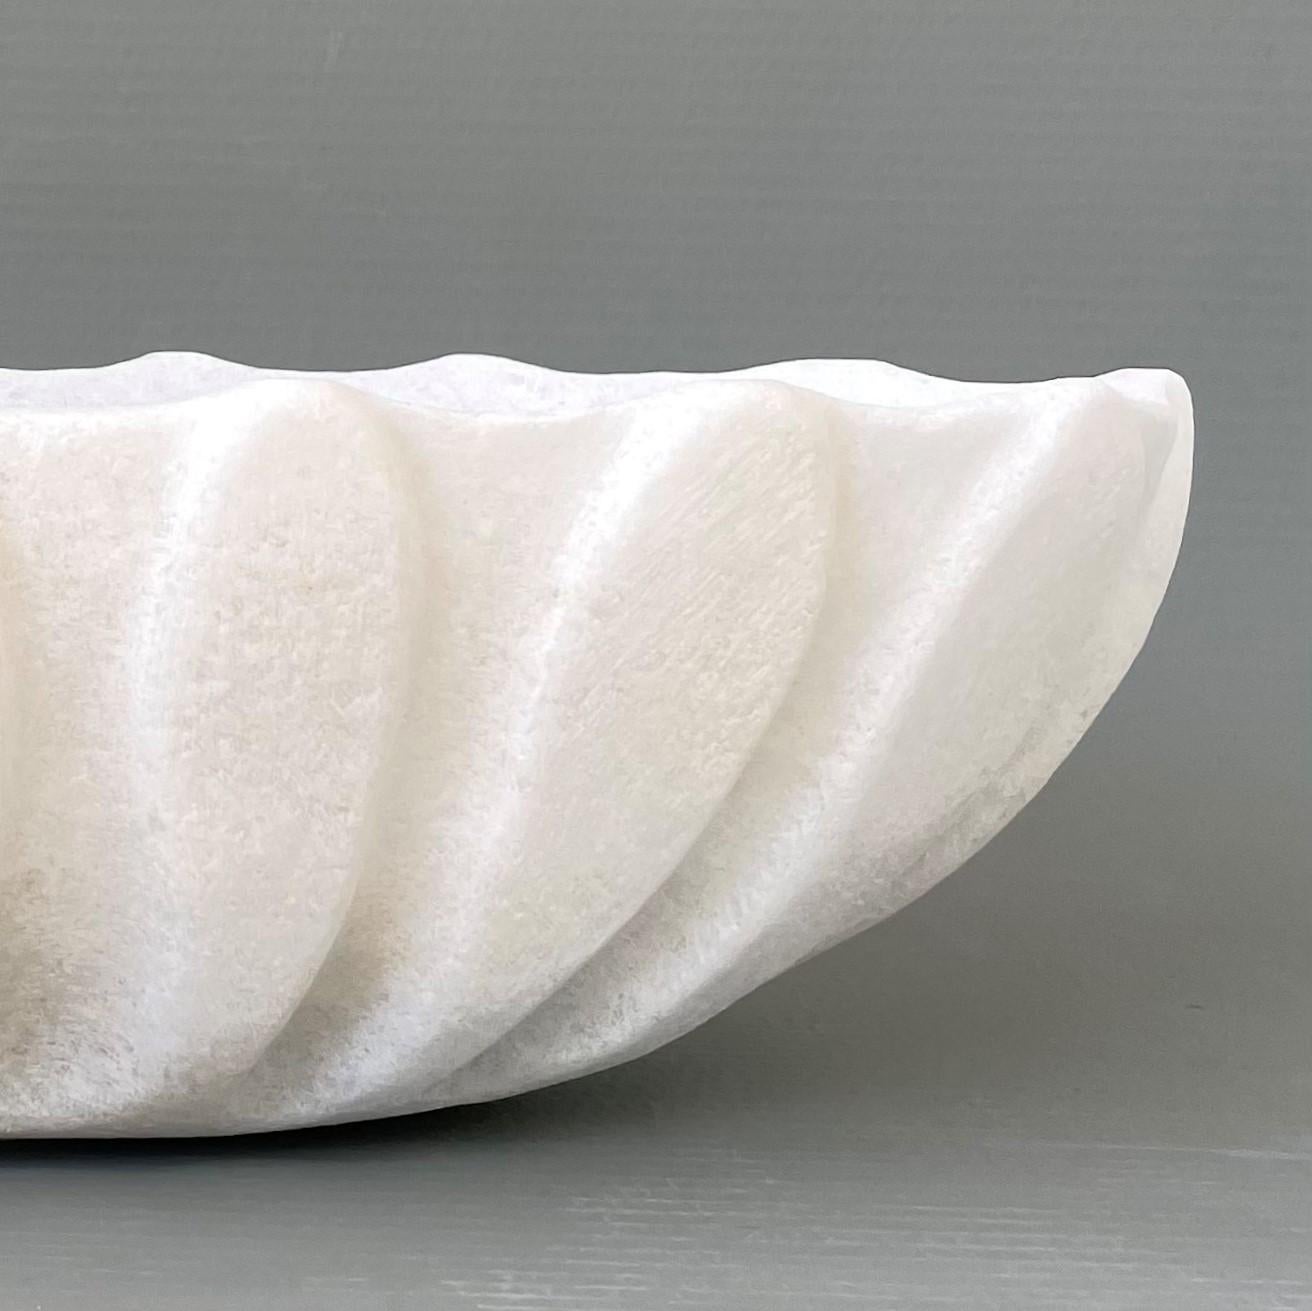 Post-Modern Hand Carved Marble Vessel by Tom Von Kaenel